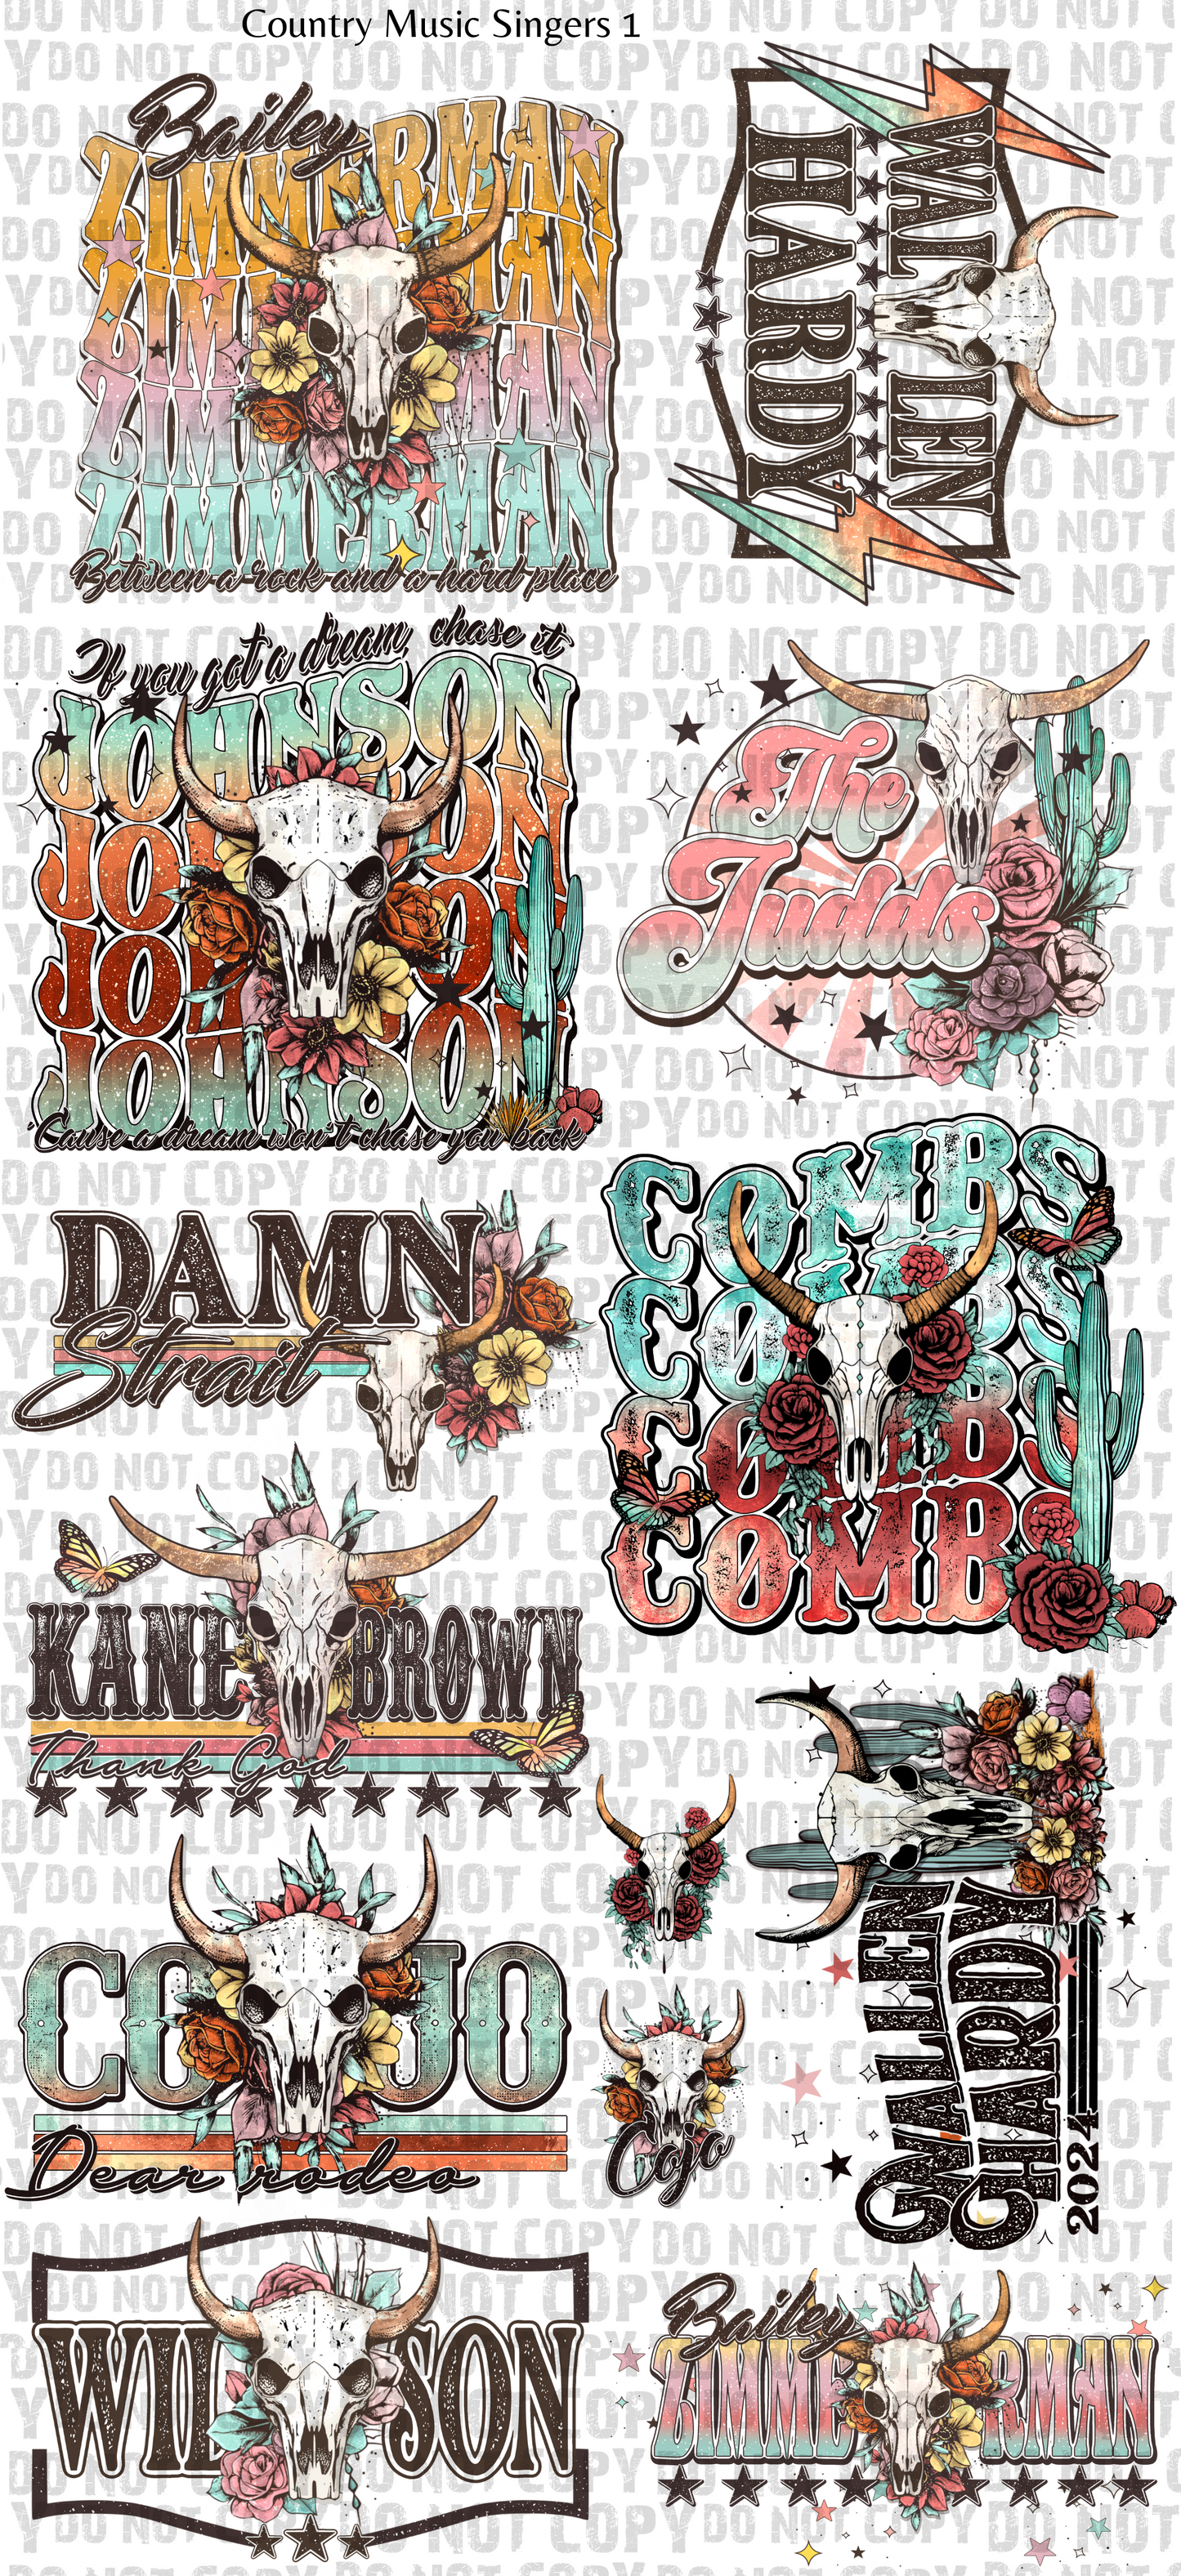 Country Music Singers 1 Gang Sheet